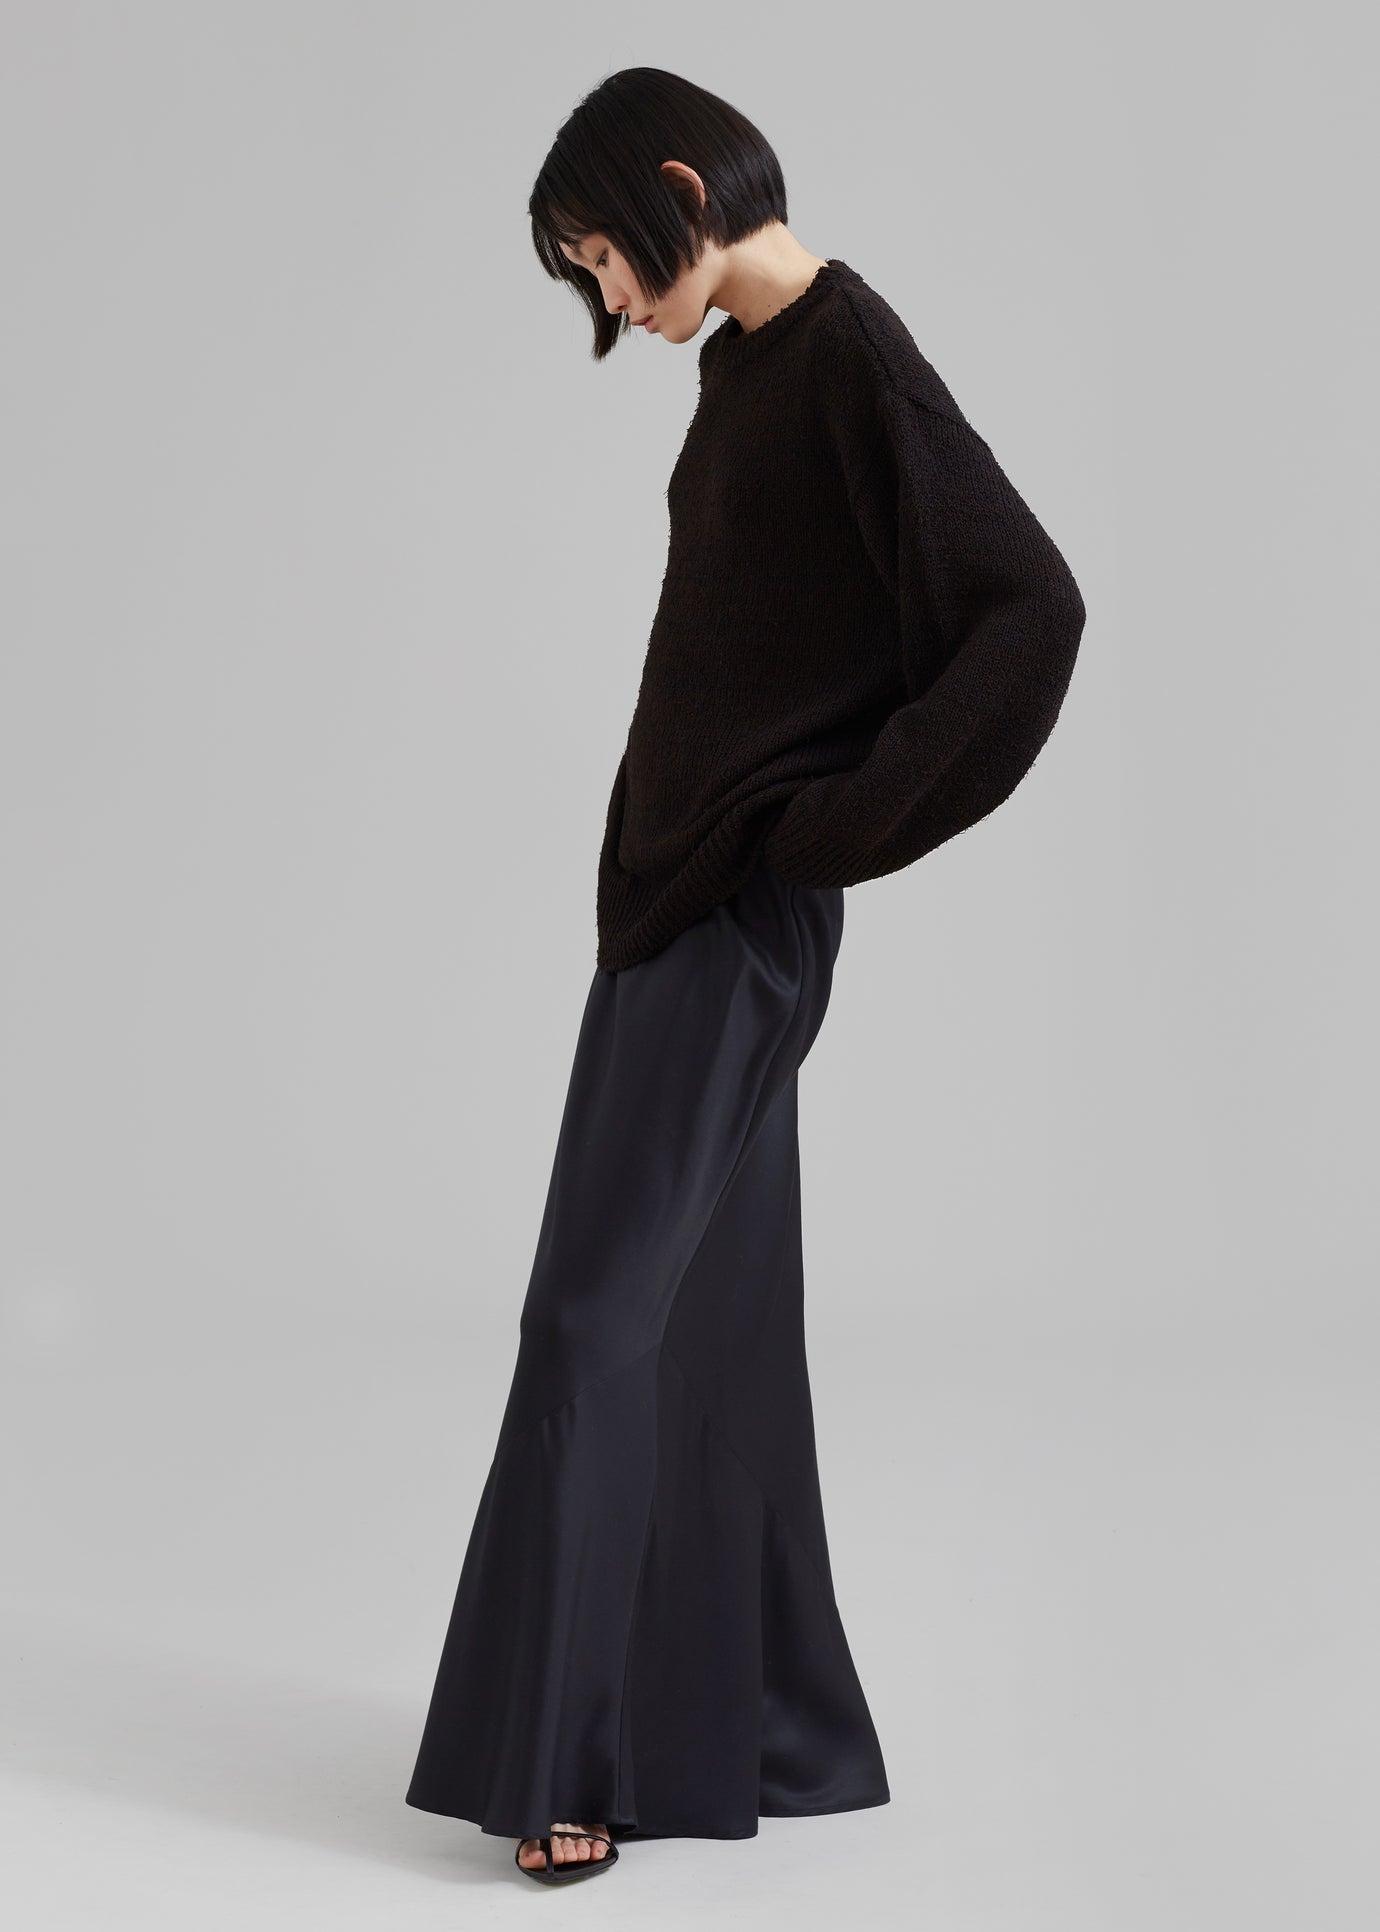 The Garment Bel Air Skirt - Black